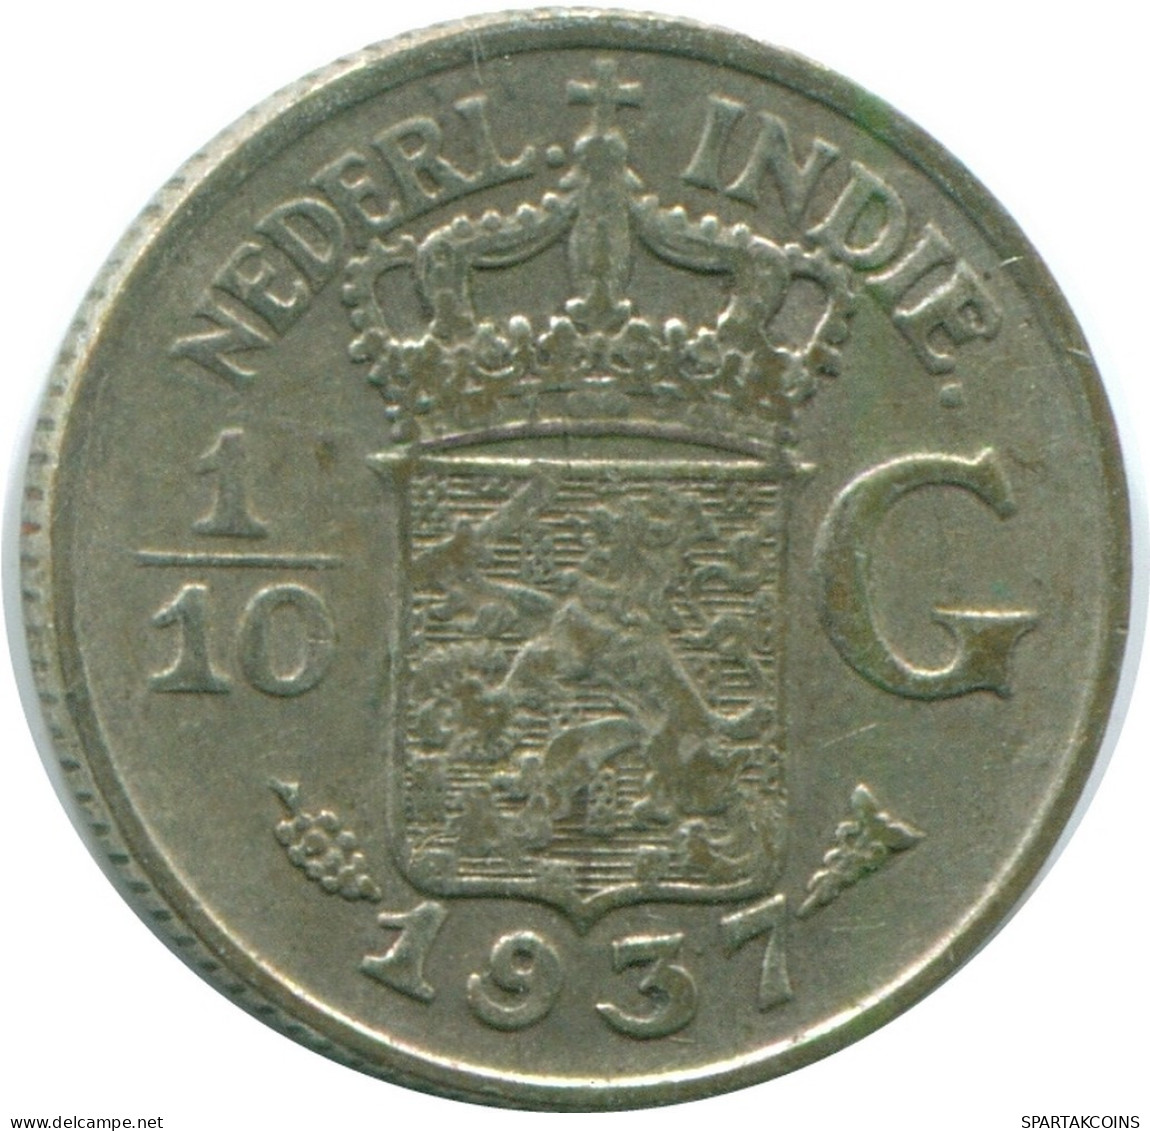 1/10 GULDEN 1937 NIEDERLANDE OSTINDIEN SILBER Koloniale Münze #NL13463.3.D.A - Dutch East Indies